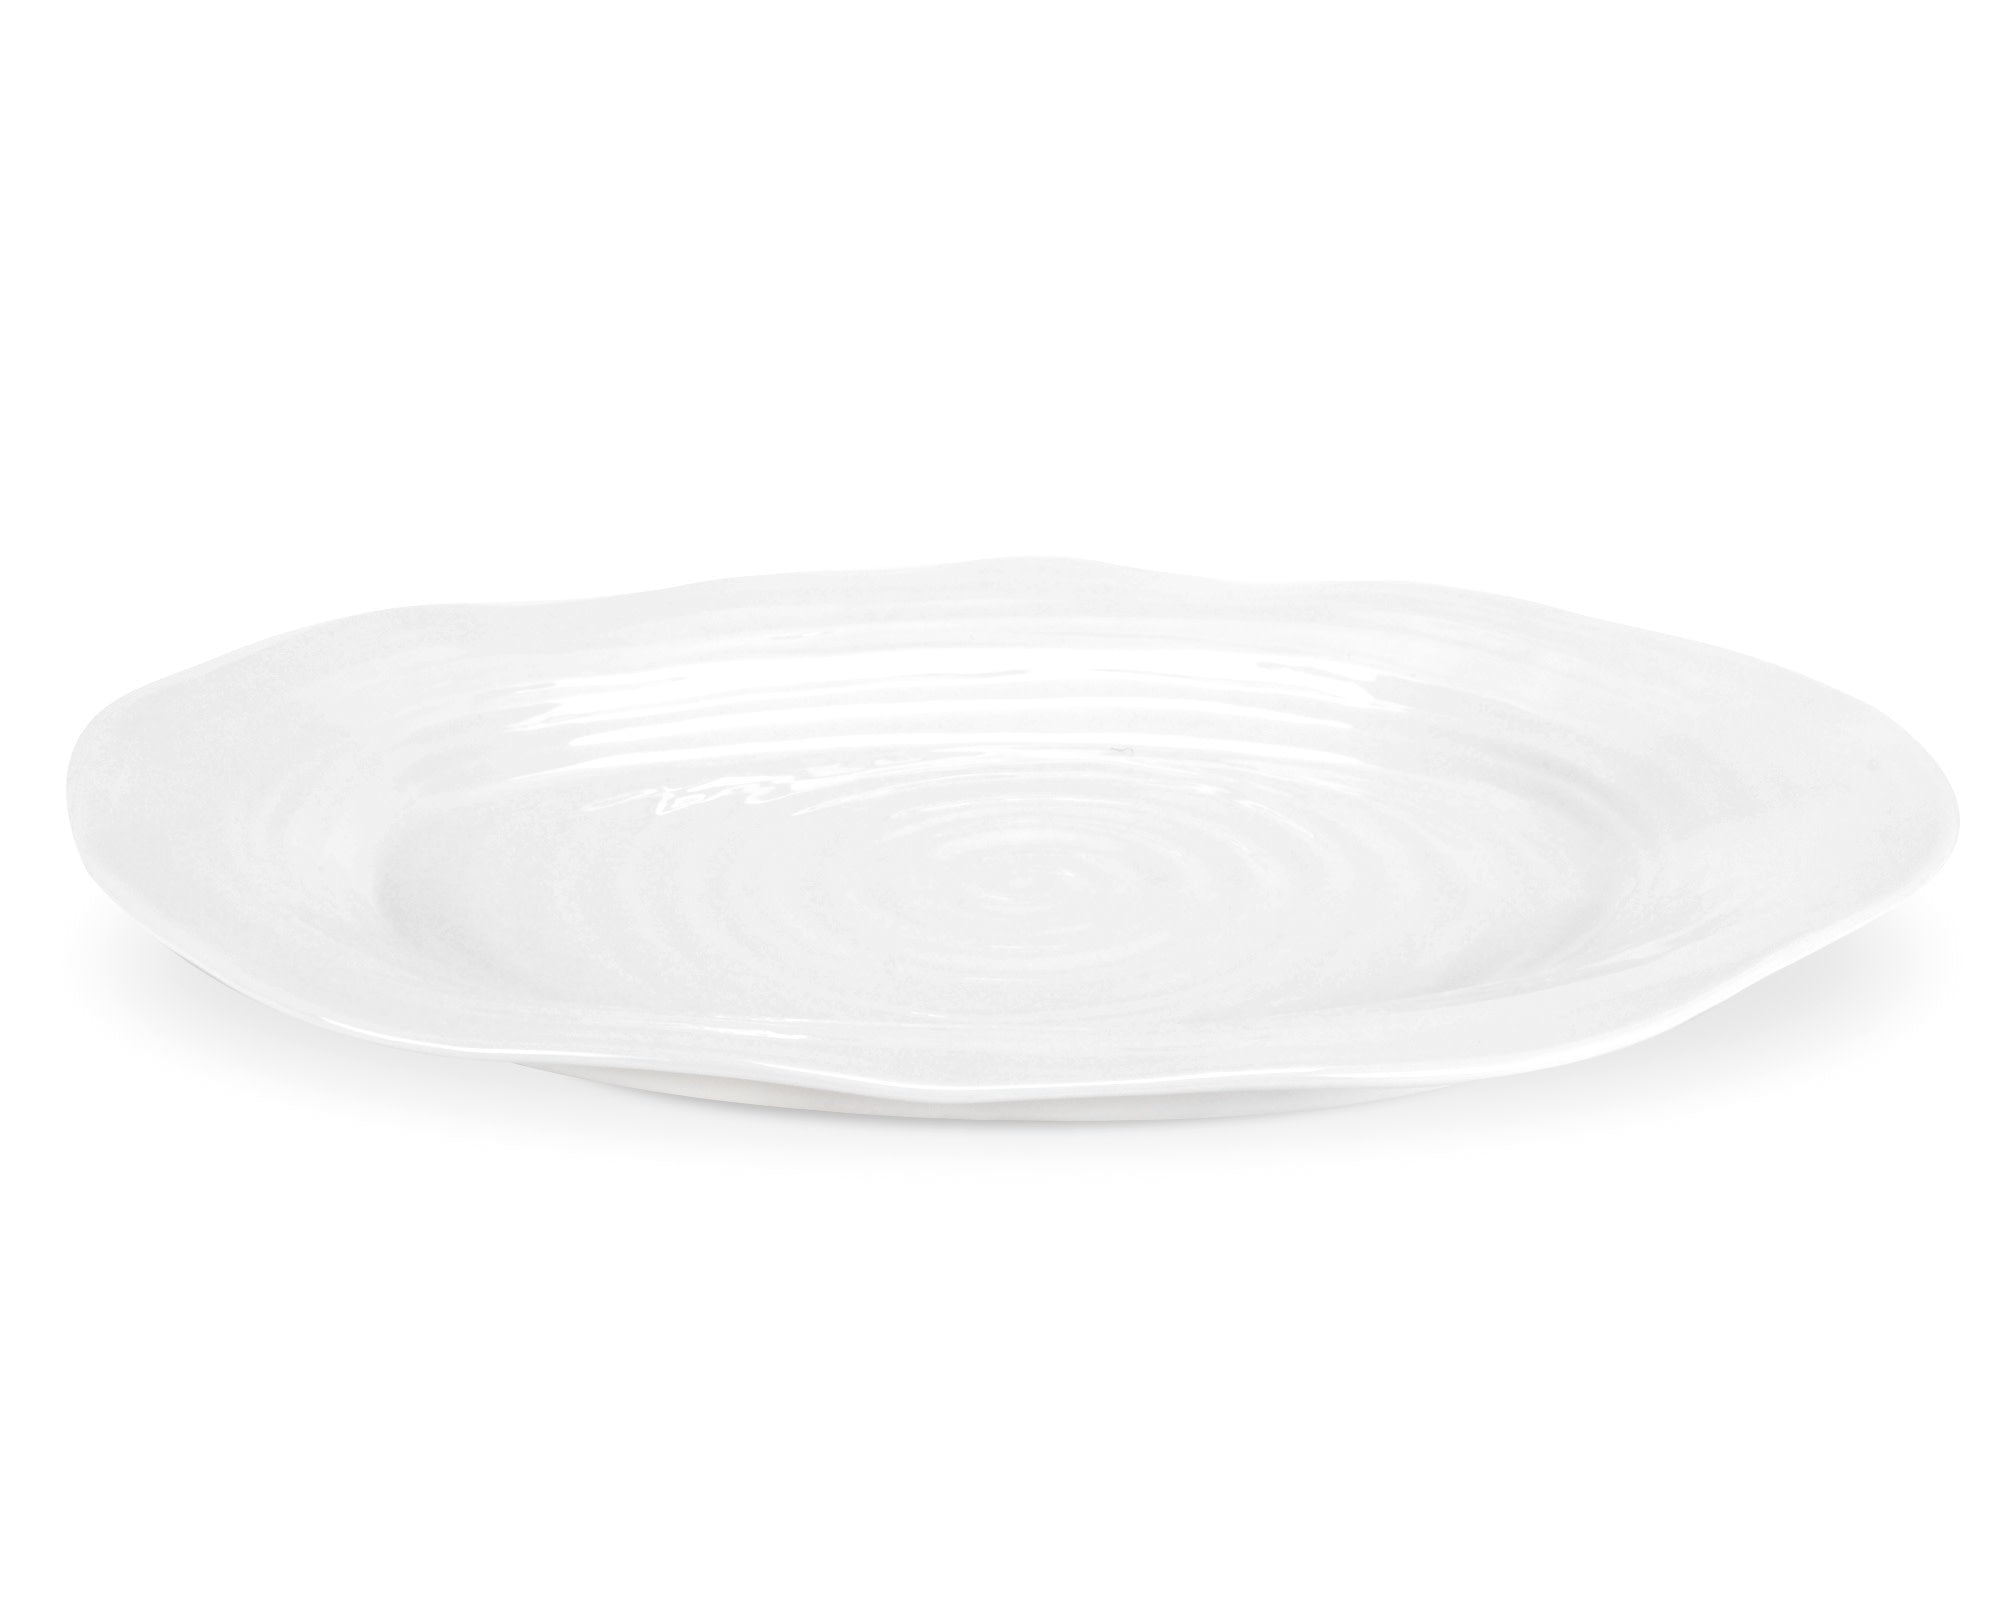 Maison Lipari Sophie Conran White Large Oval Platter 17''  PORTMEIRION.